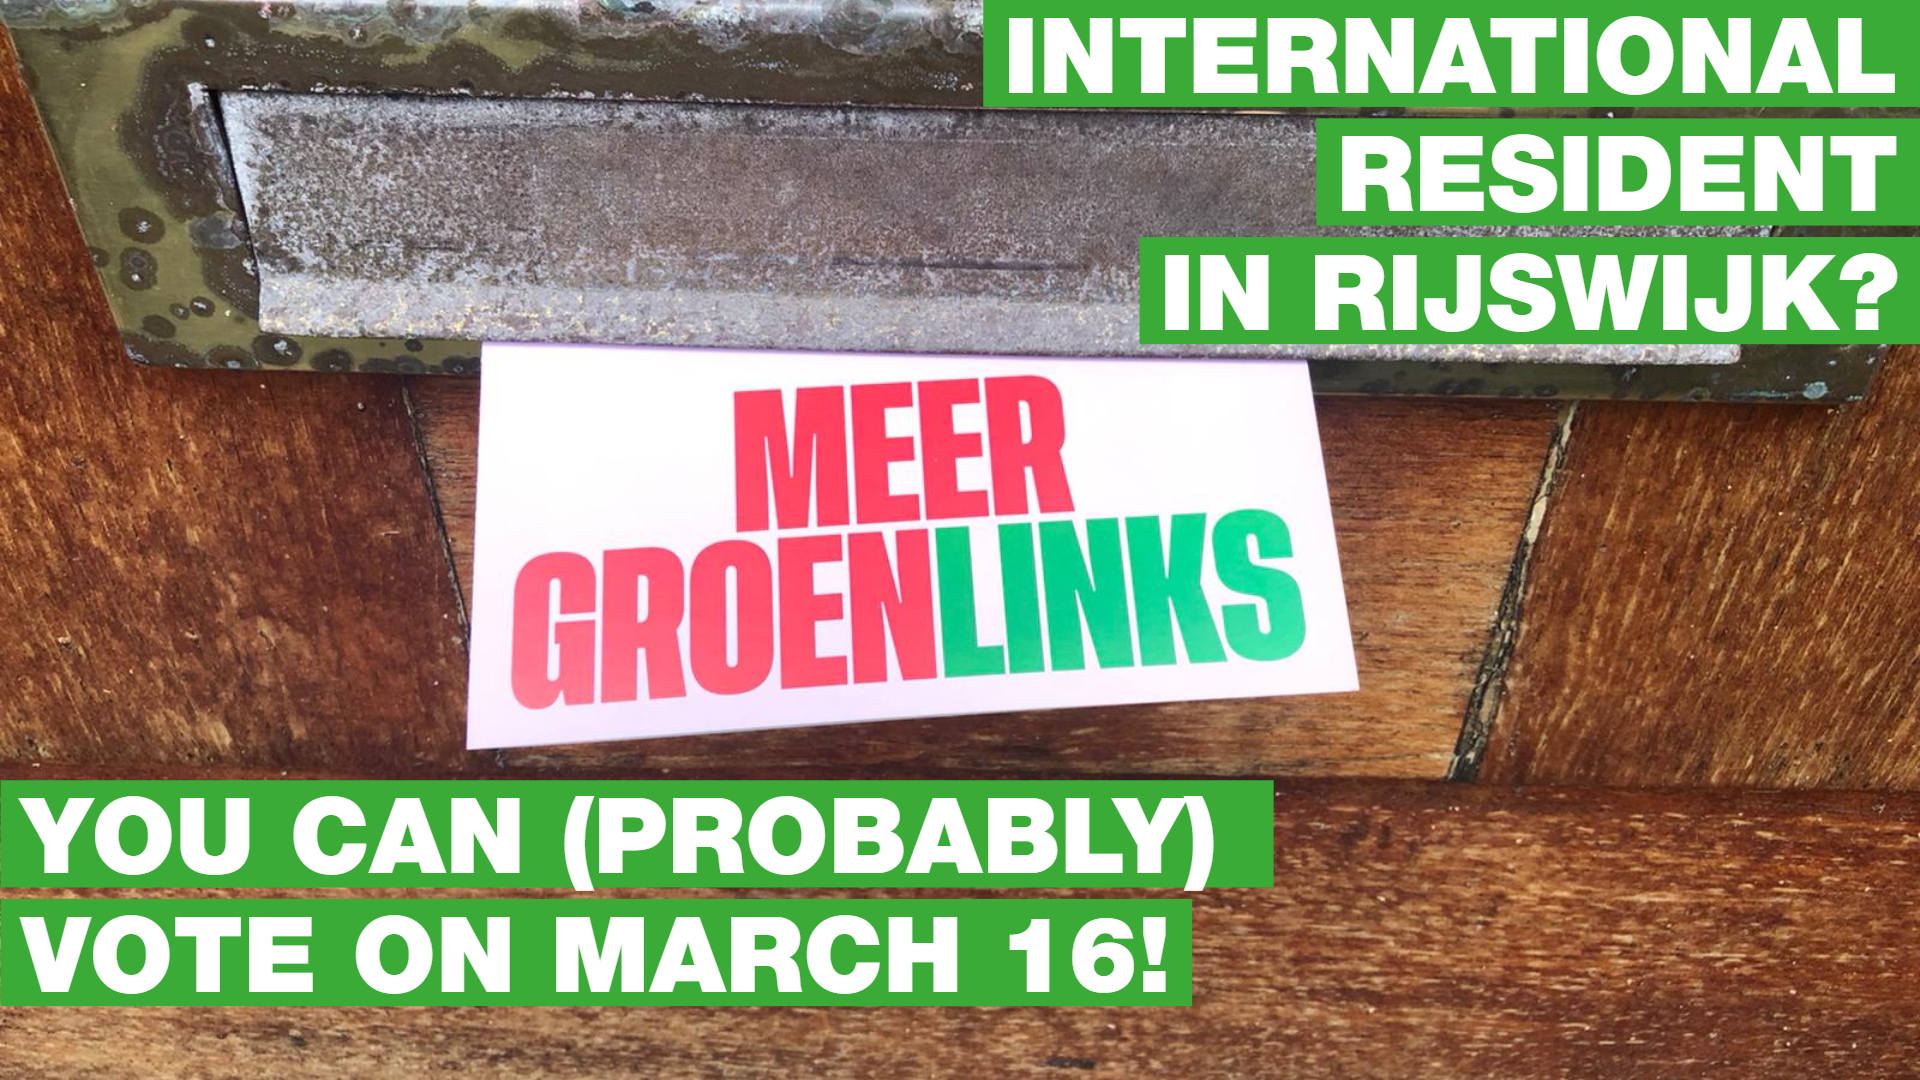 International voters header image: GroenLinks flyer